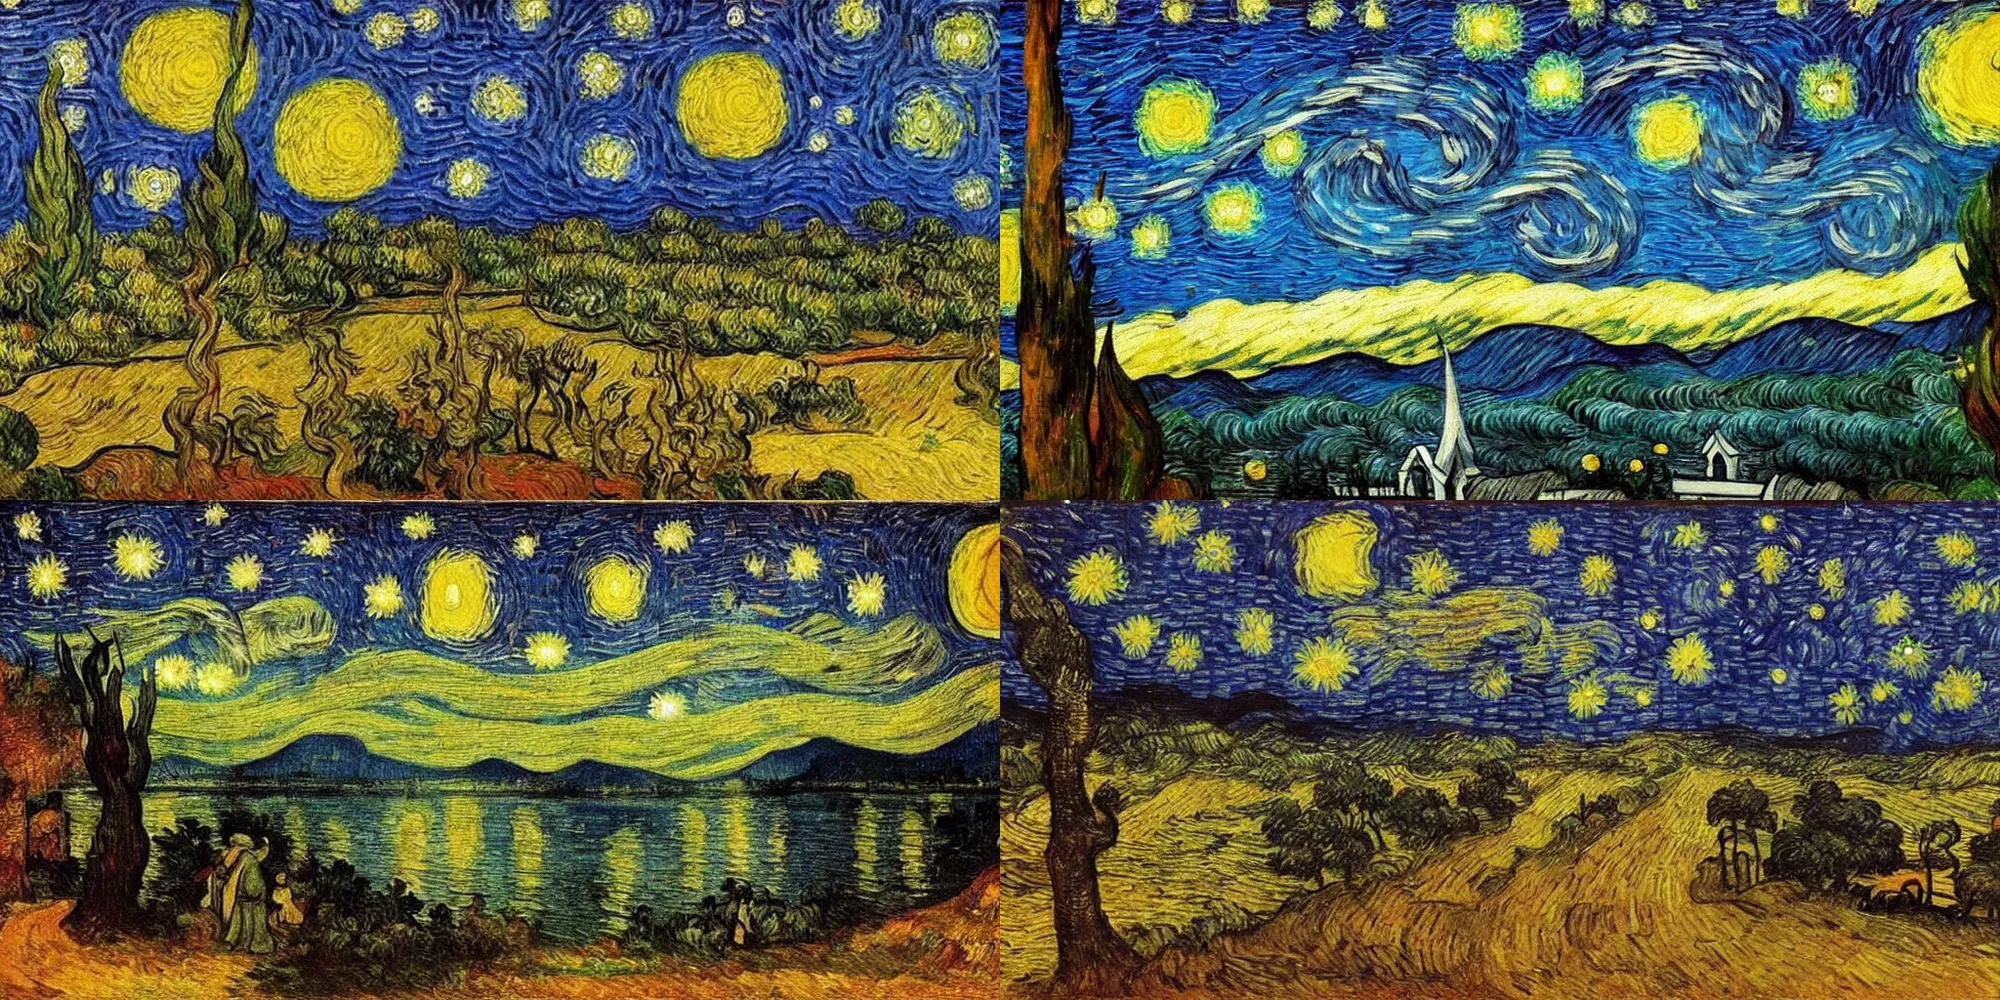 Prompt: a collaborative painting of kerala by leonardo da vinci and van Gogh, starry nights